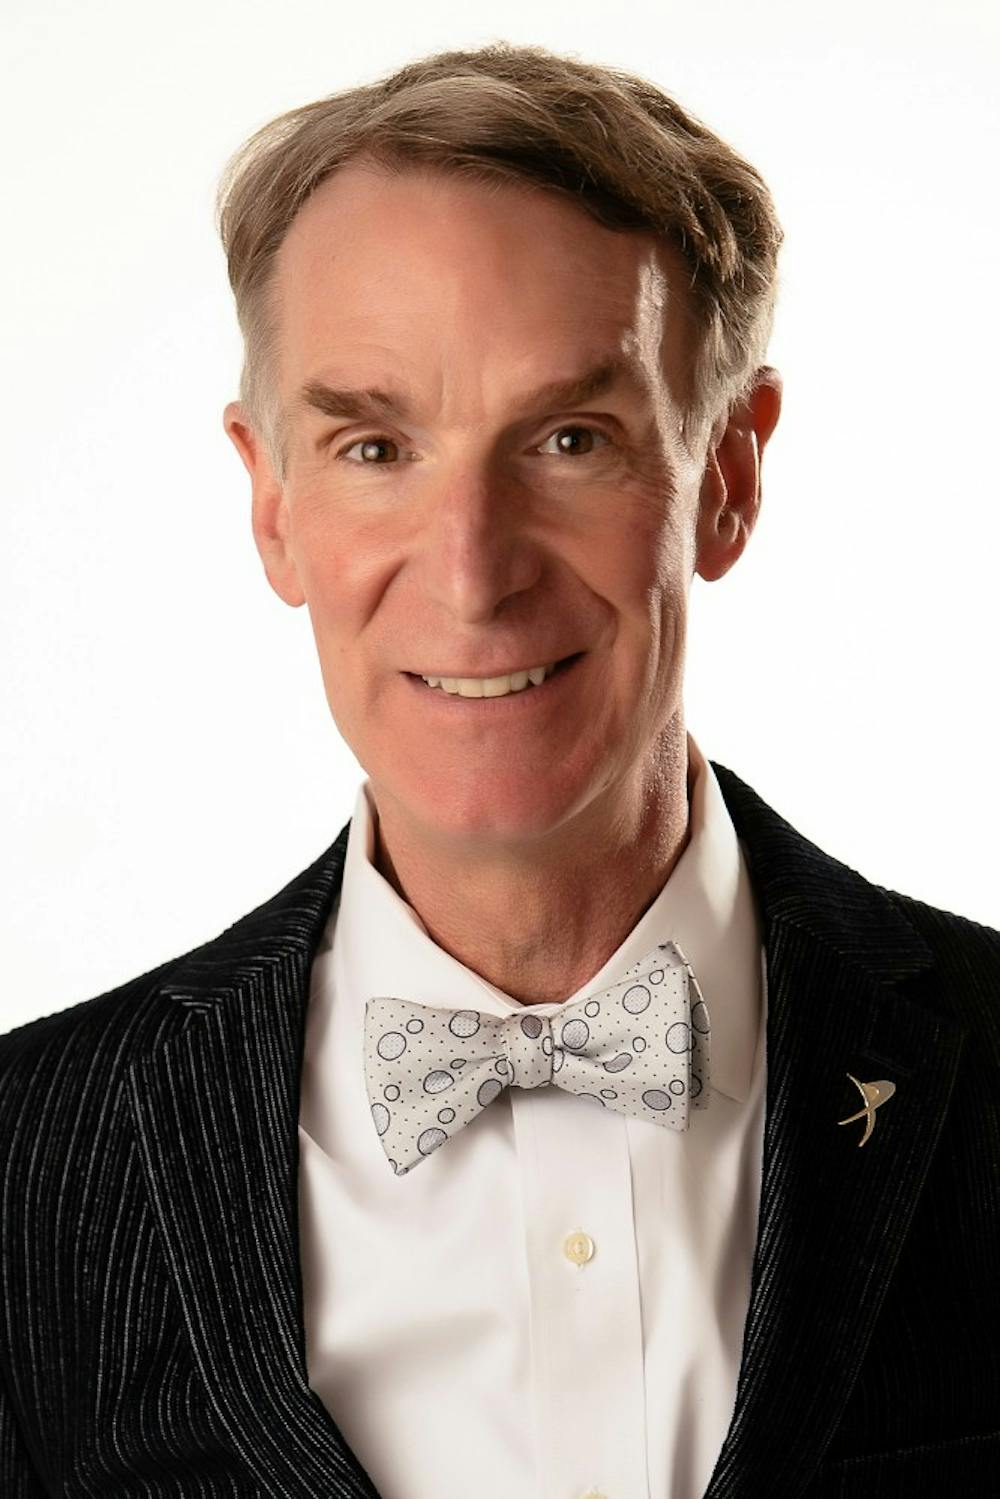 Bill Nye to speak at AU on Feb. 9
